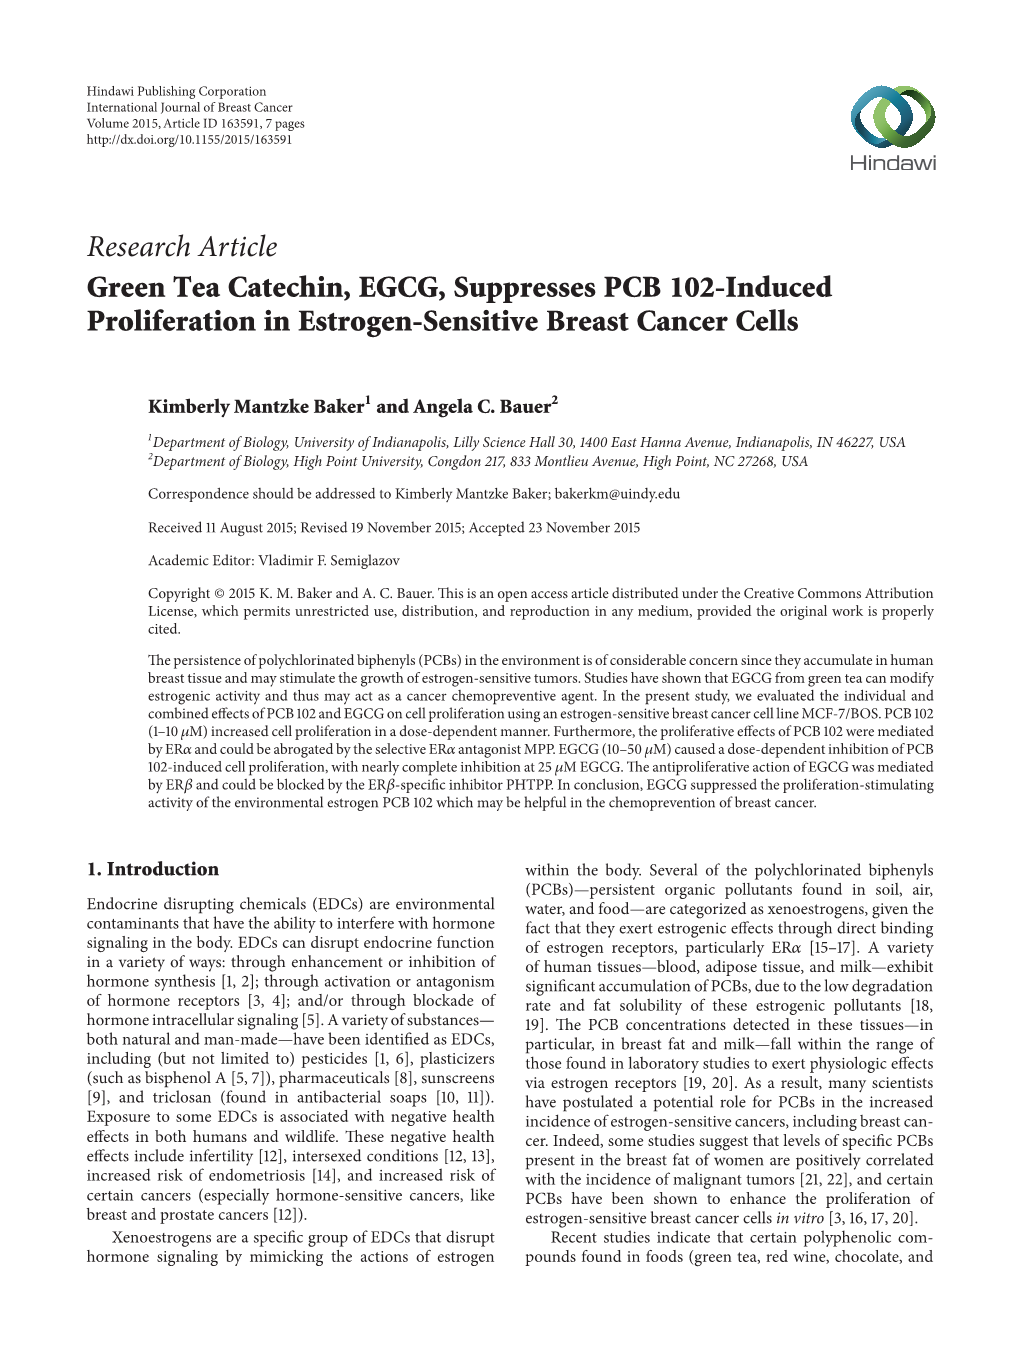 Research Article Green Tea Catechin, EGCG, Suppresses PCB 102-Induced Proliferation in Estrogen-Sensitive Breast Cancer Cells